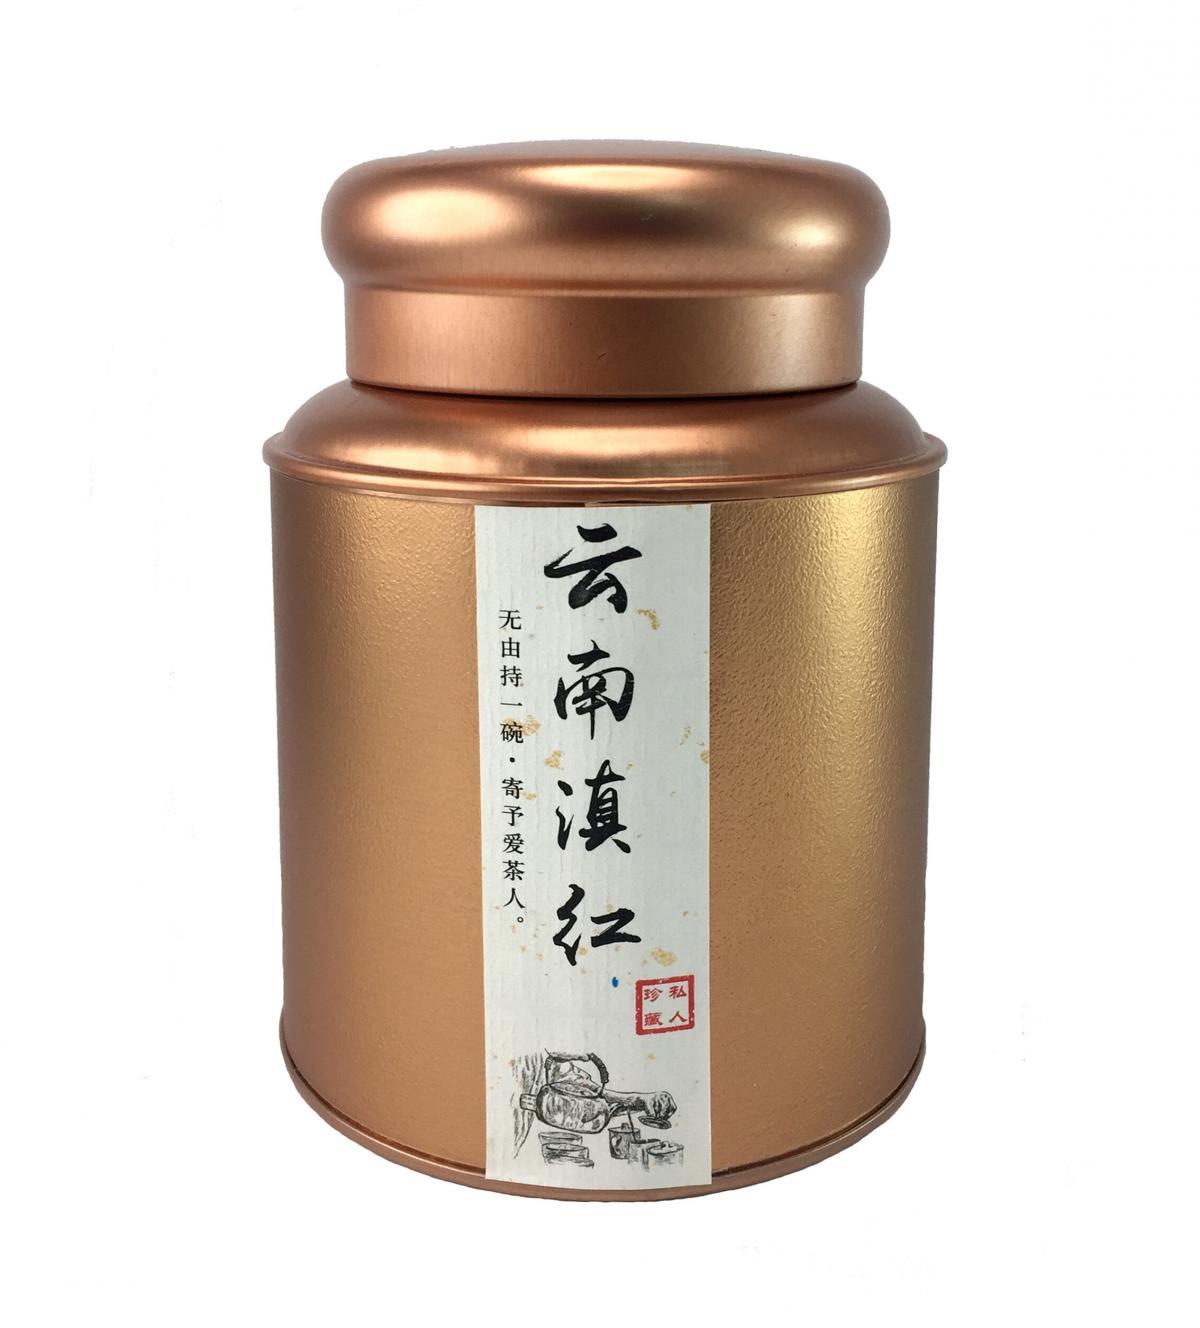 Yunnan Black Tea 120g [過年 l 節慶 送禮] - 雲南滇紅茶 (16035)